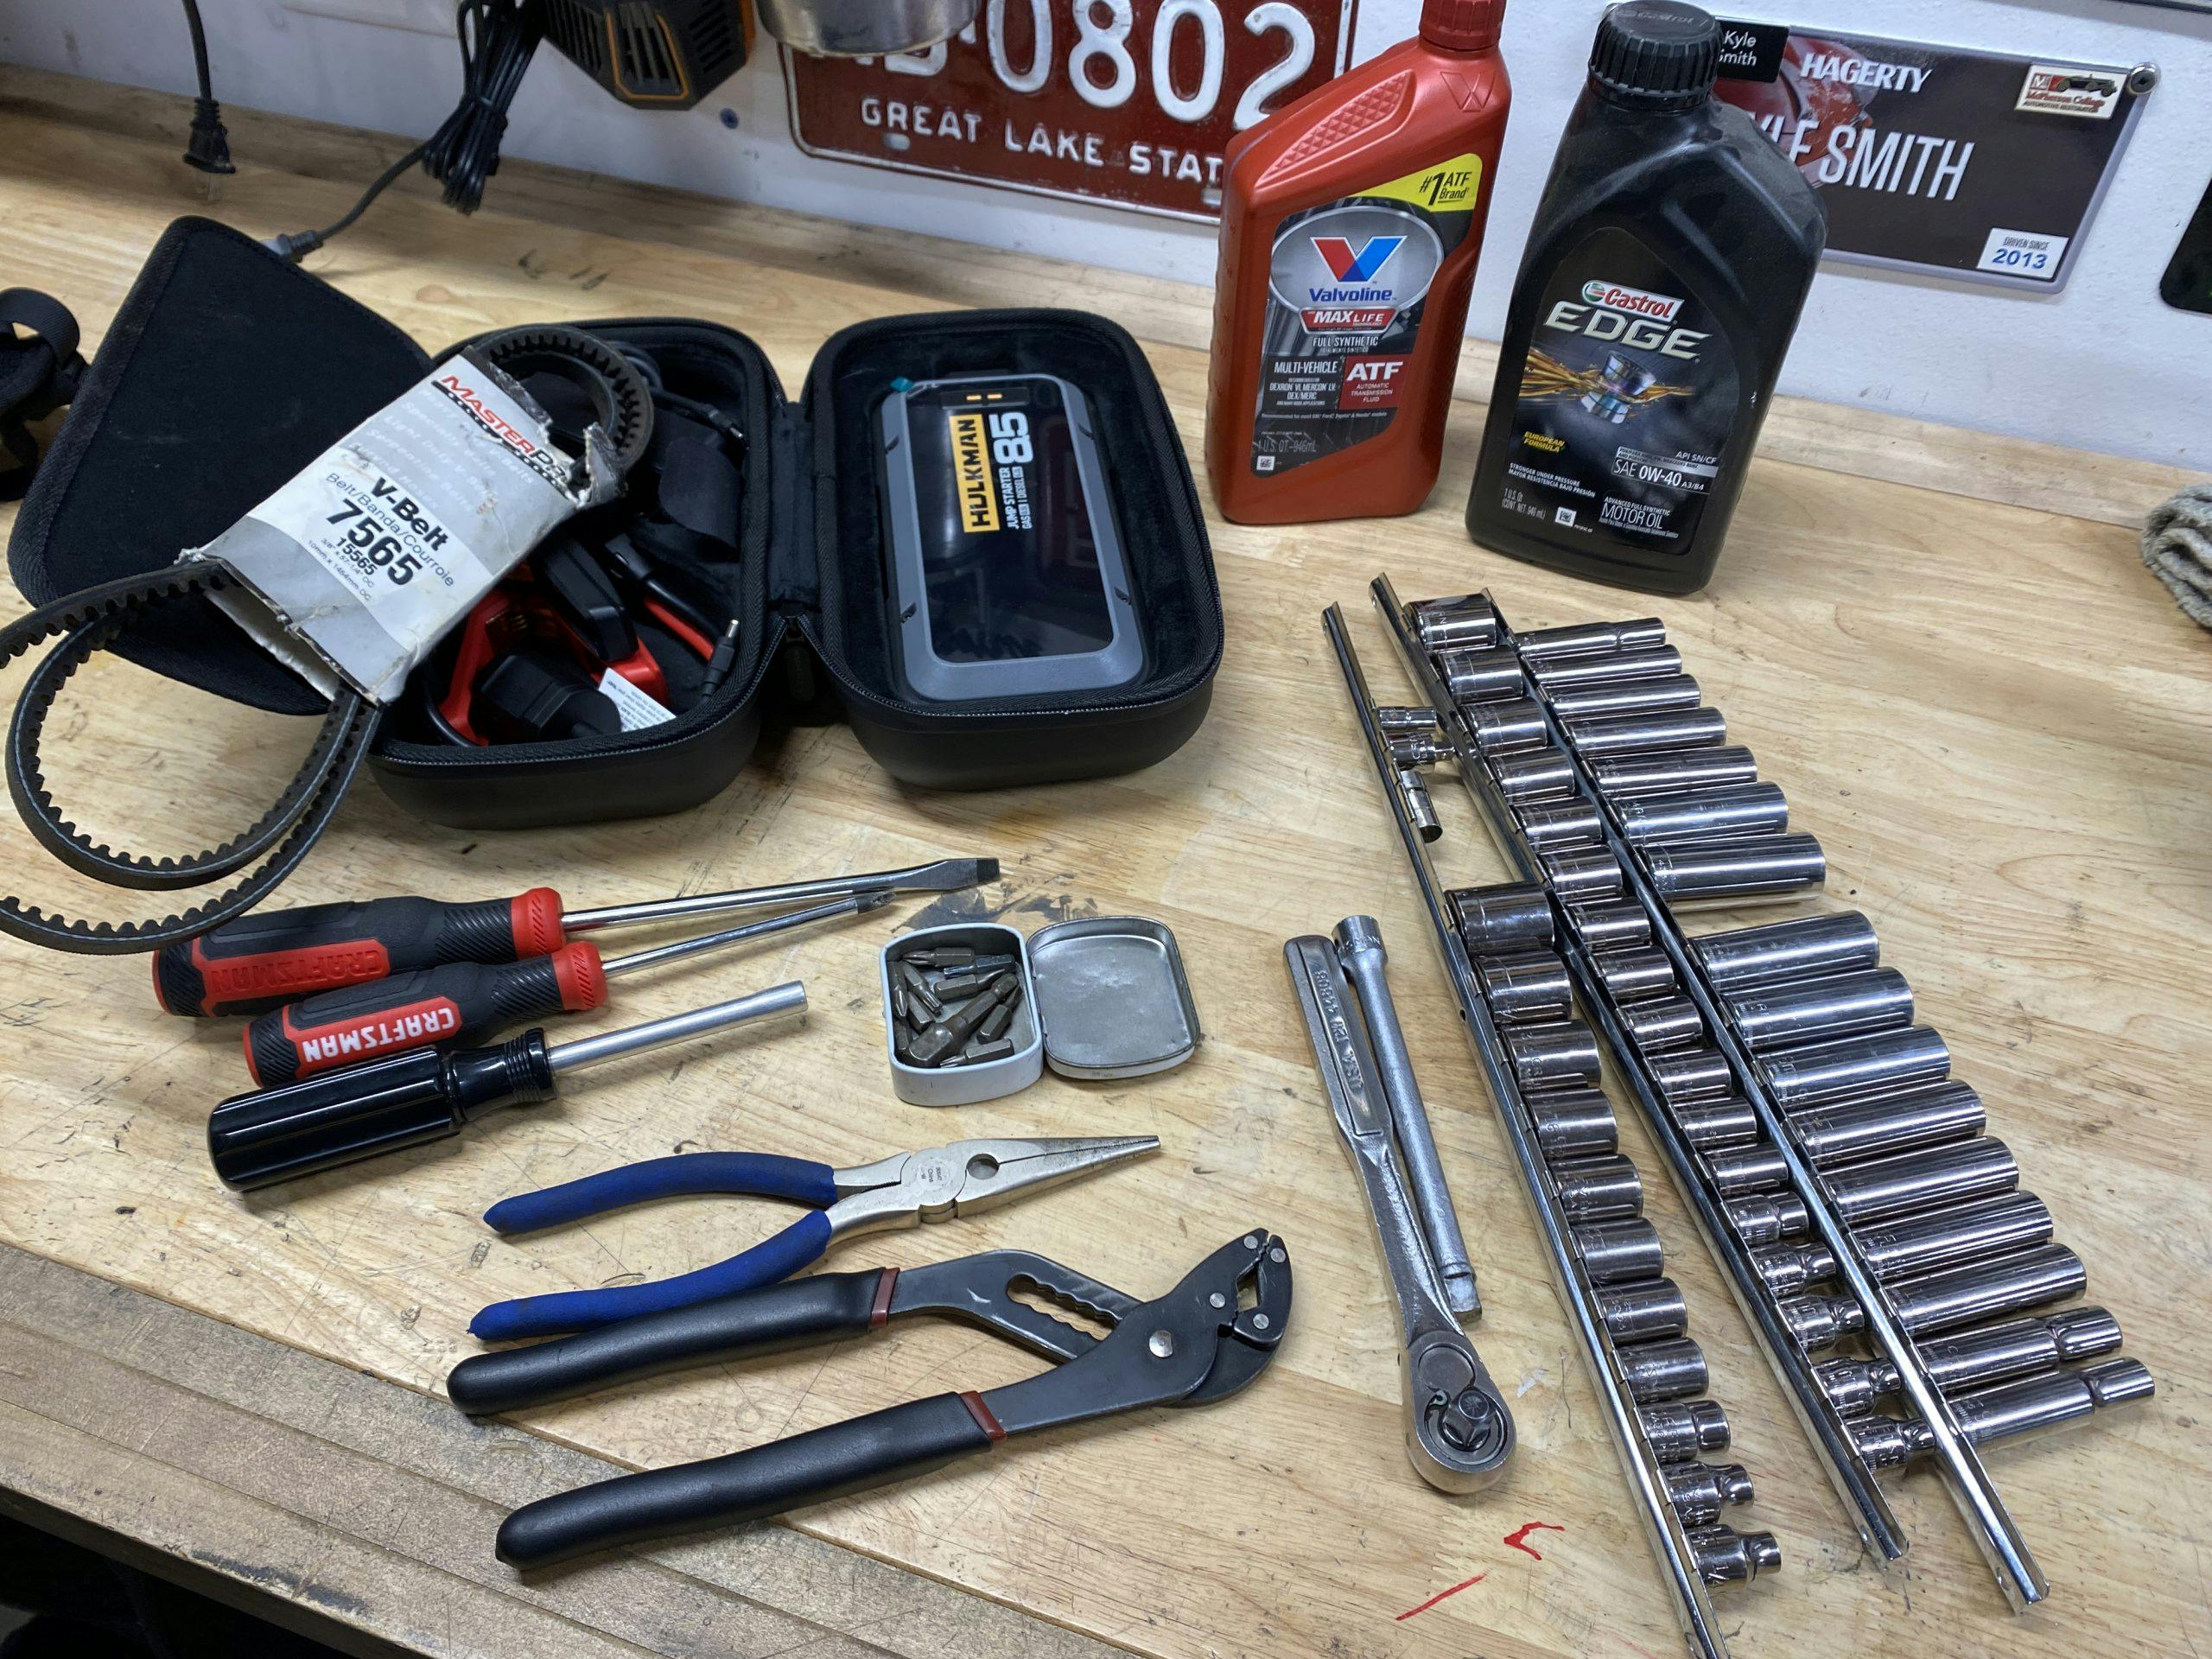 HOTO Tool Set, Hand Tool Set/Home Tool Kit, DIY Set Tool Household Hand  Tool with Screwdriver Wrench Hammer Tape Plier Tool Box, Essential  Mechanics